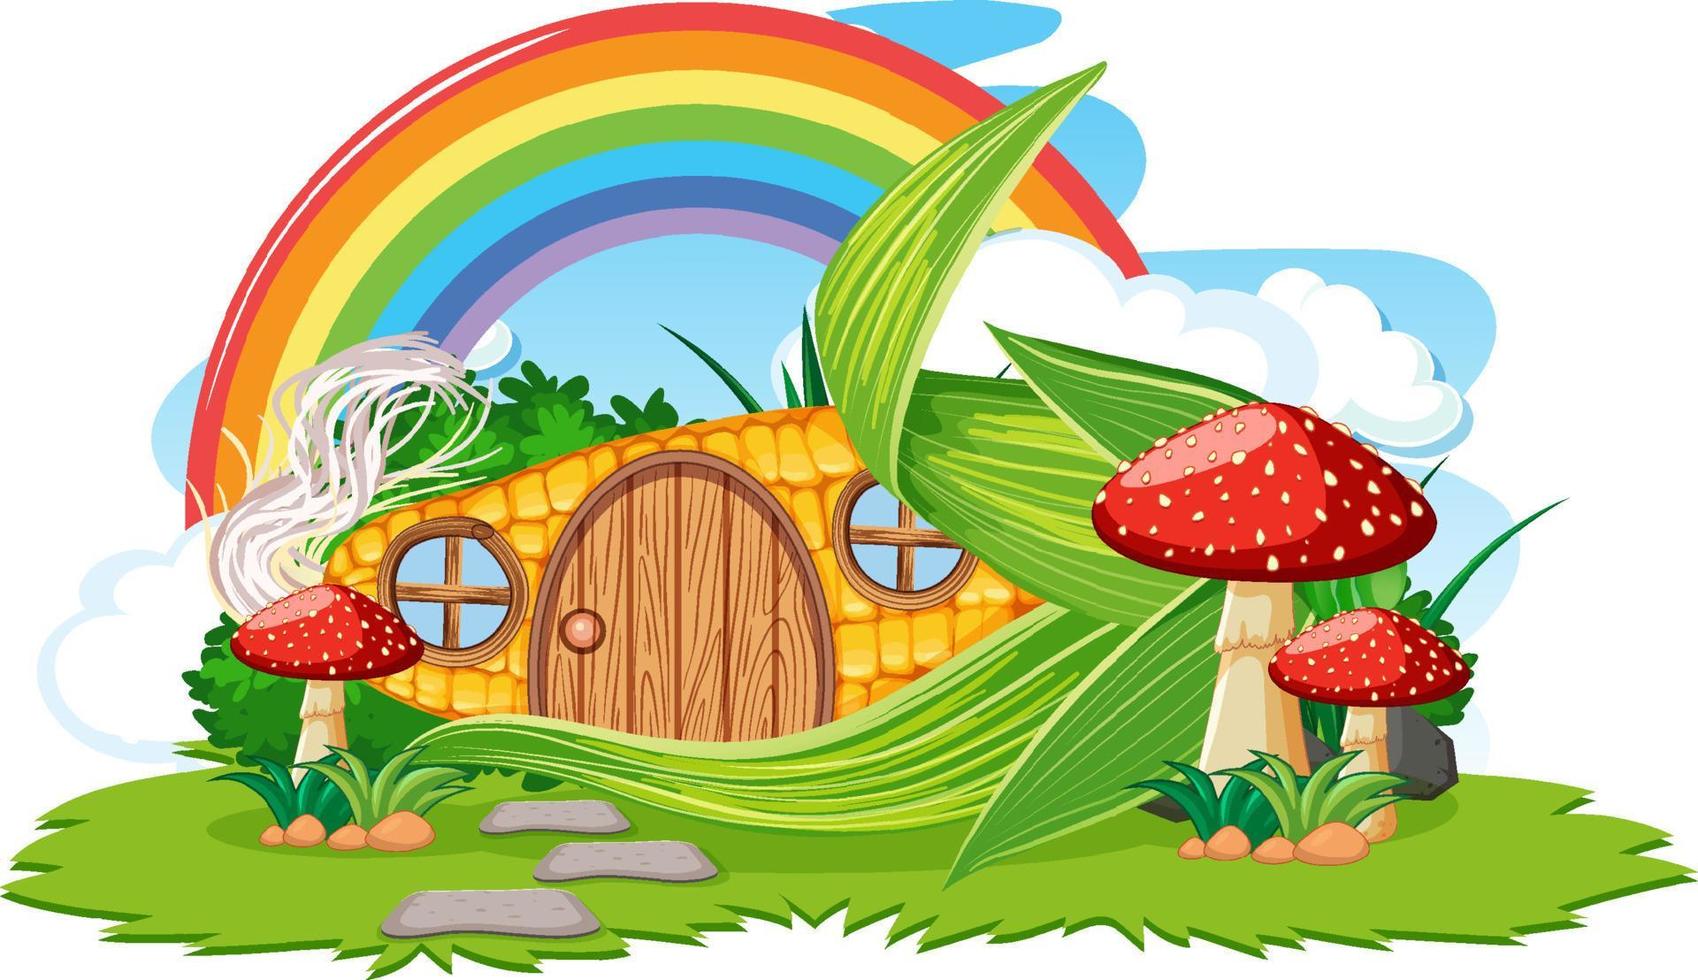 Fantasy corn house with rainbow in the sky vector